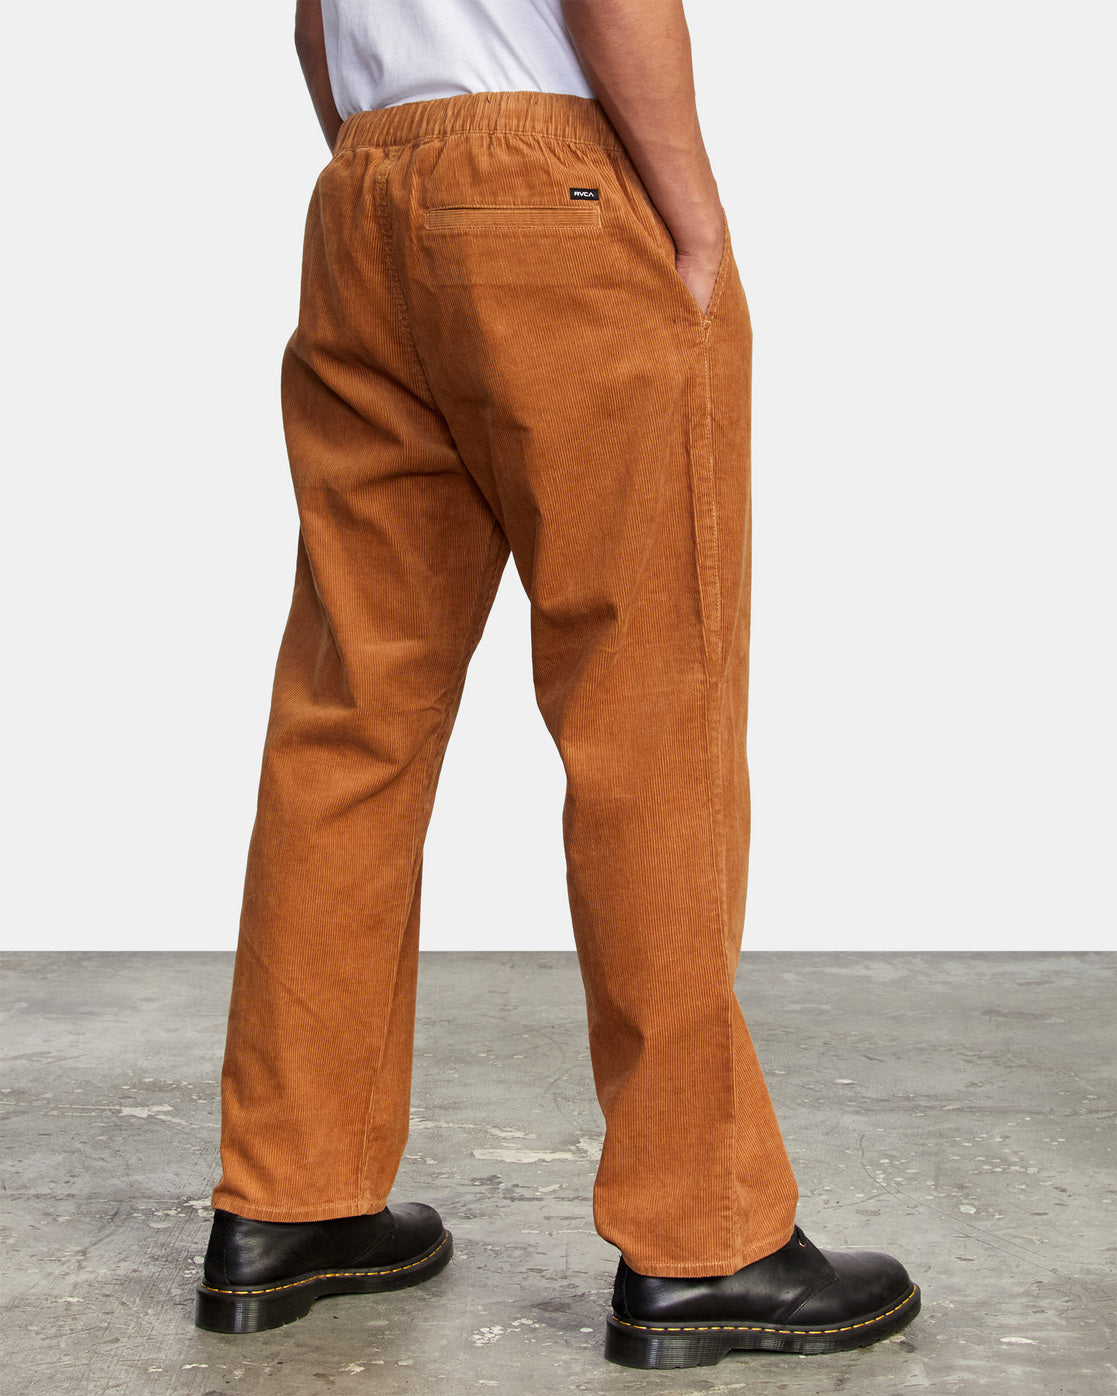 MKYSB Men Spring Autumn Trousers Elastic Waist Corduroy Pants